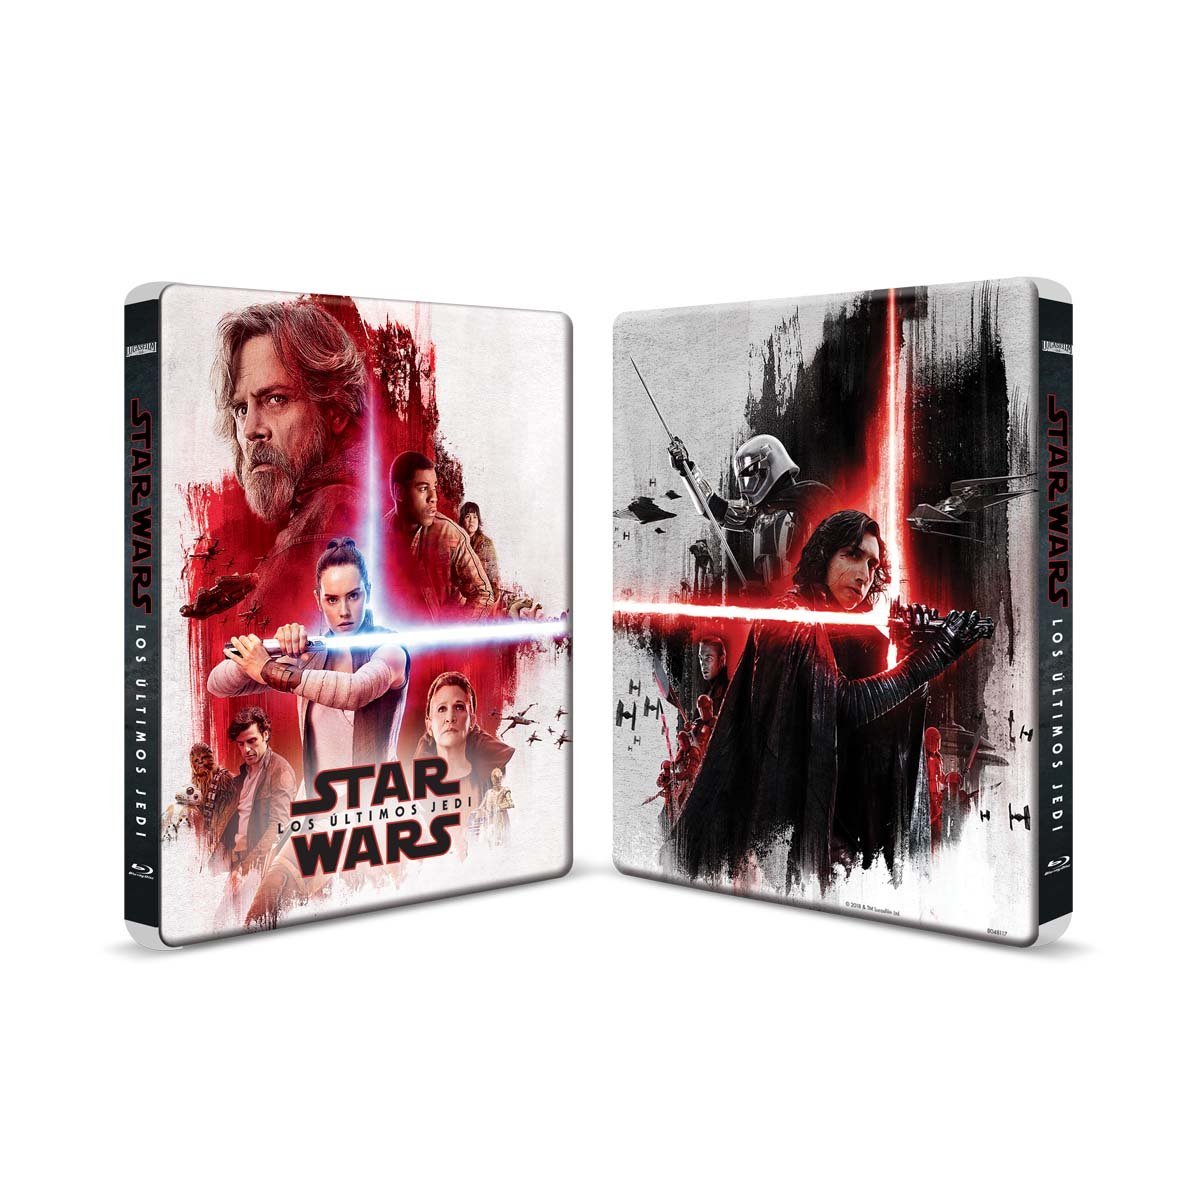 Blu Ray + Dvd + Bonus Steelbook Star Wars los Ultimos Jedi